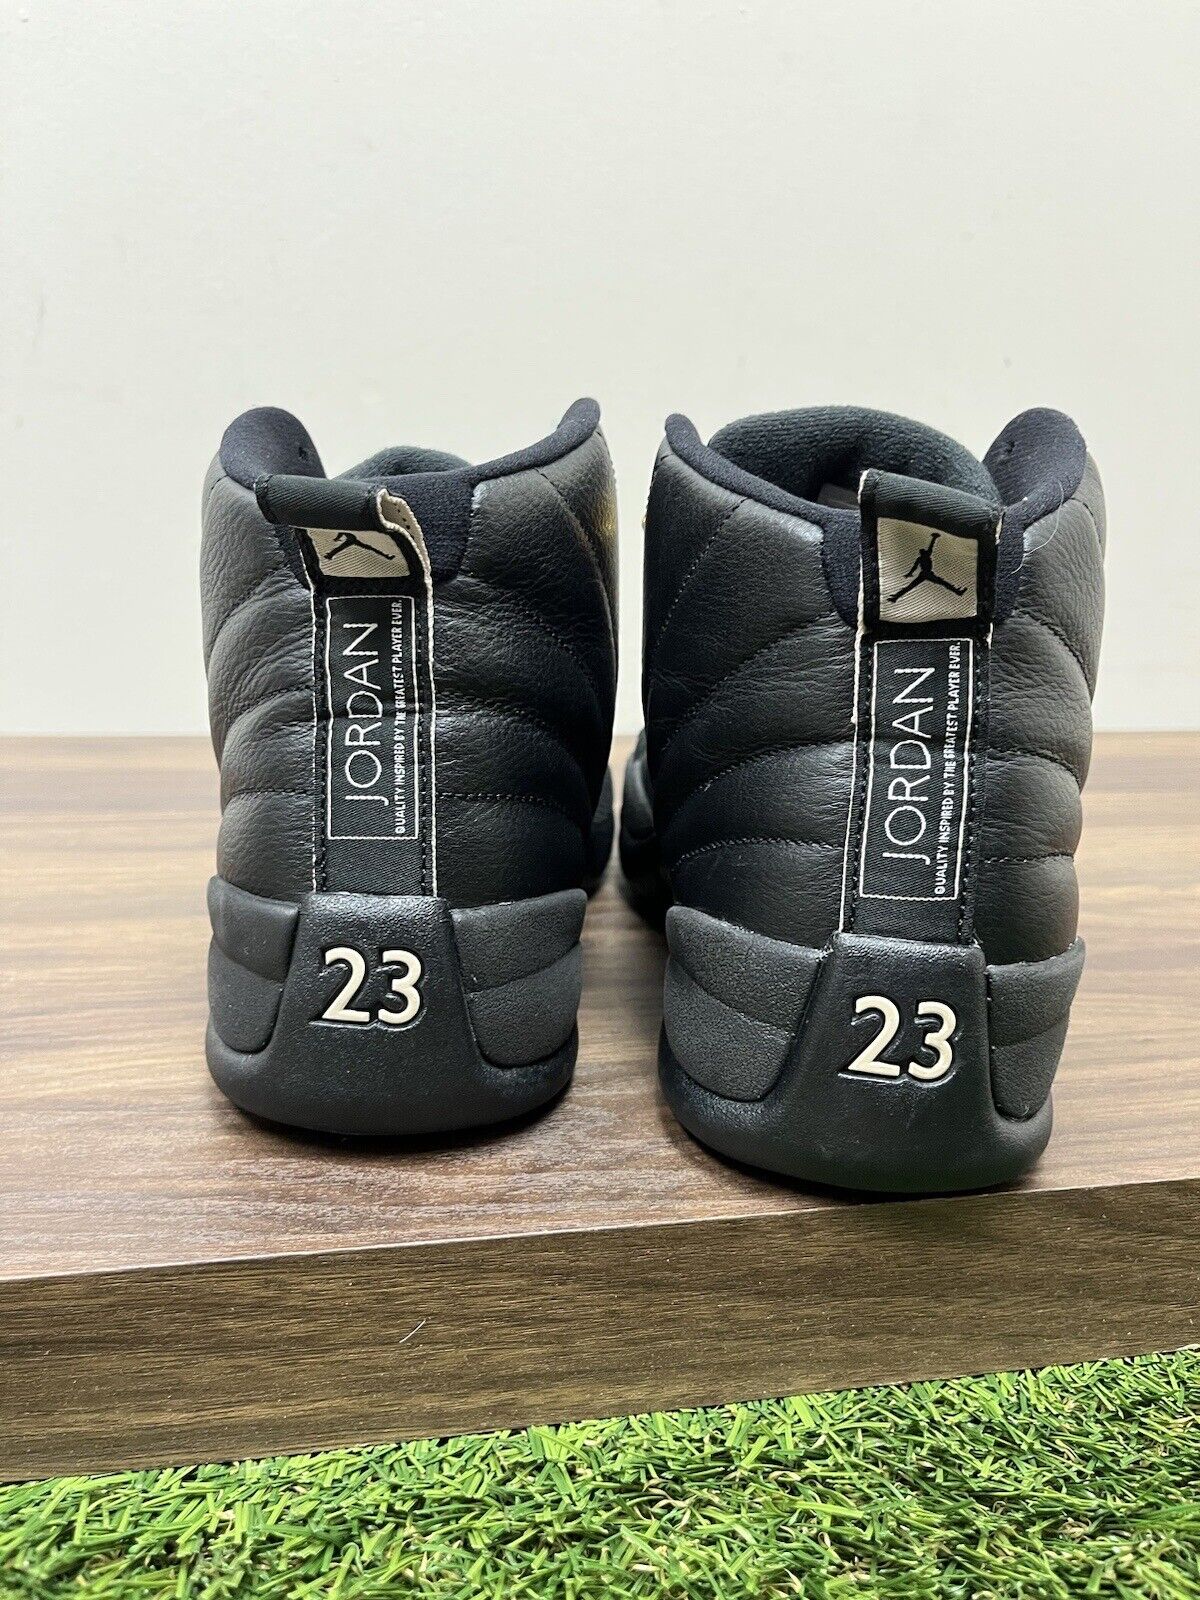 Air Jordan 12 Retro The Master Size 11 130690-013 100% Authentic Black White